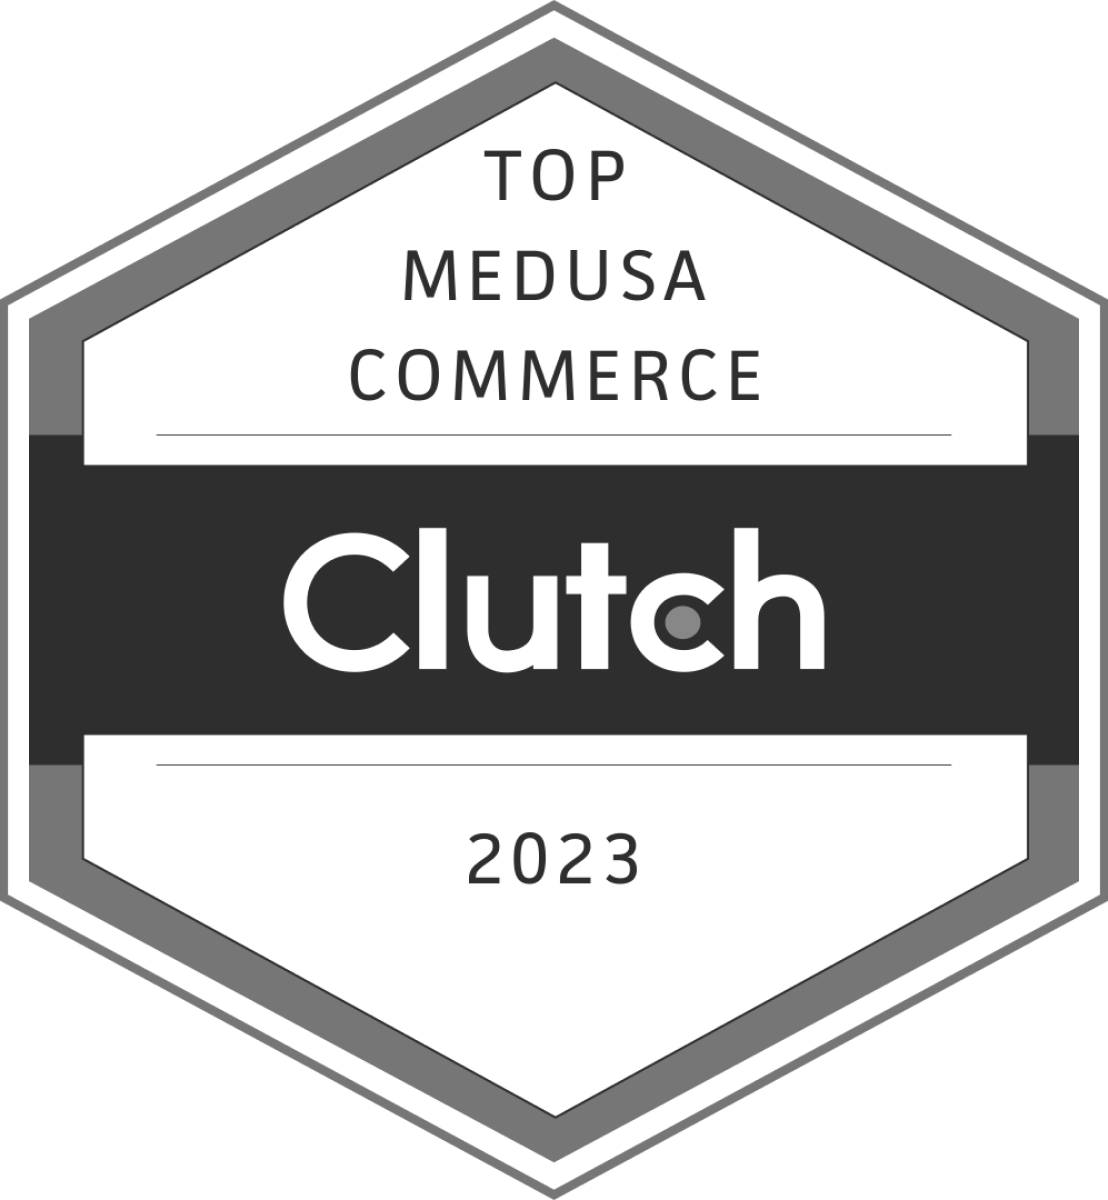 Clutch - Top Medusa Commerce 2023